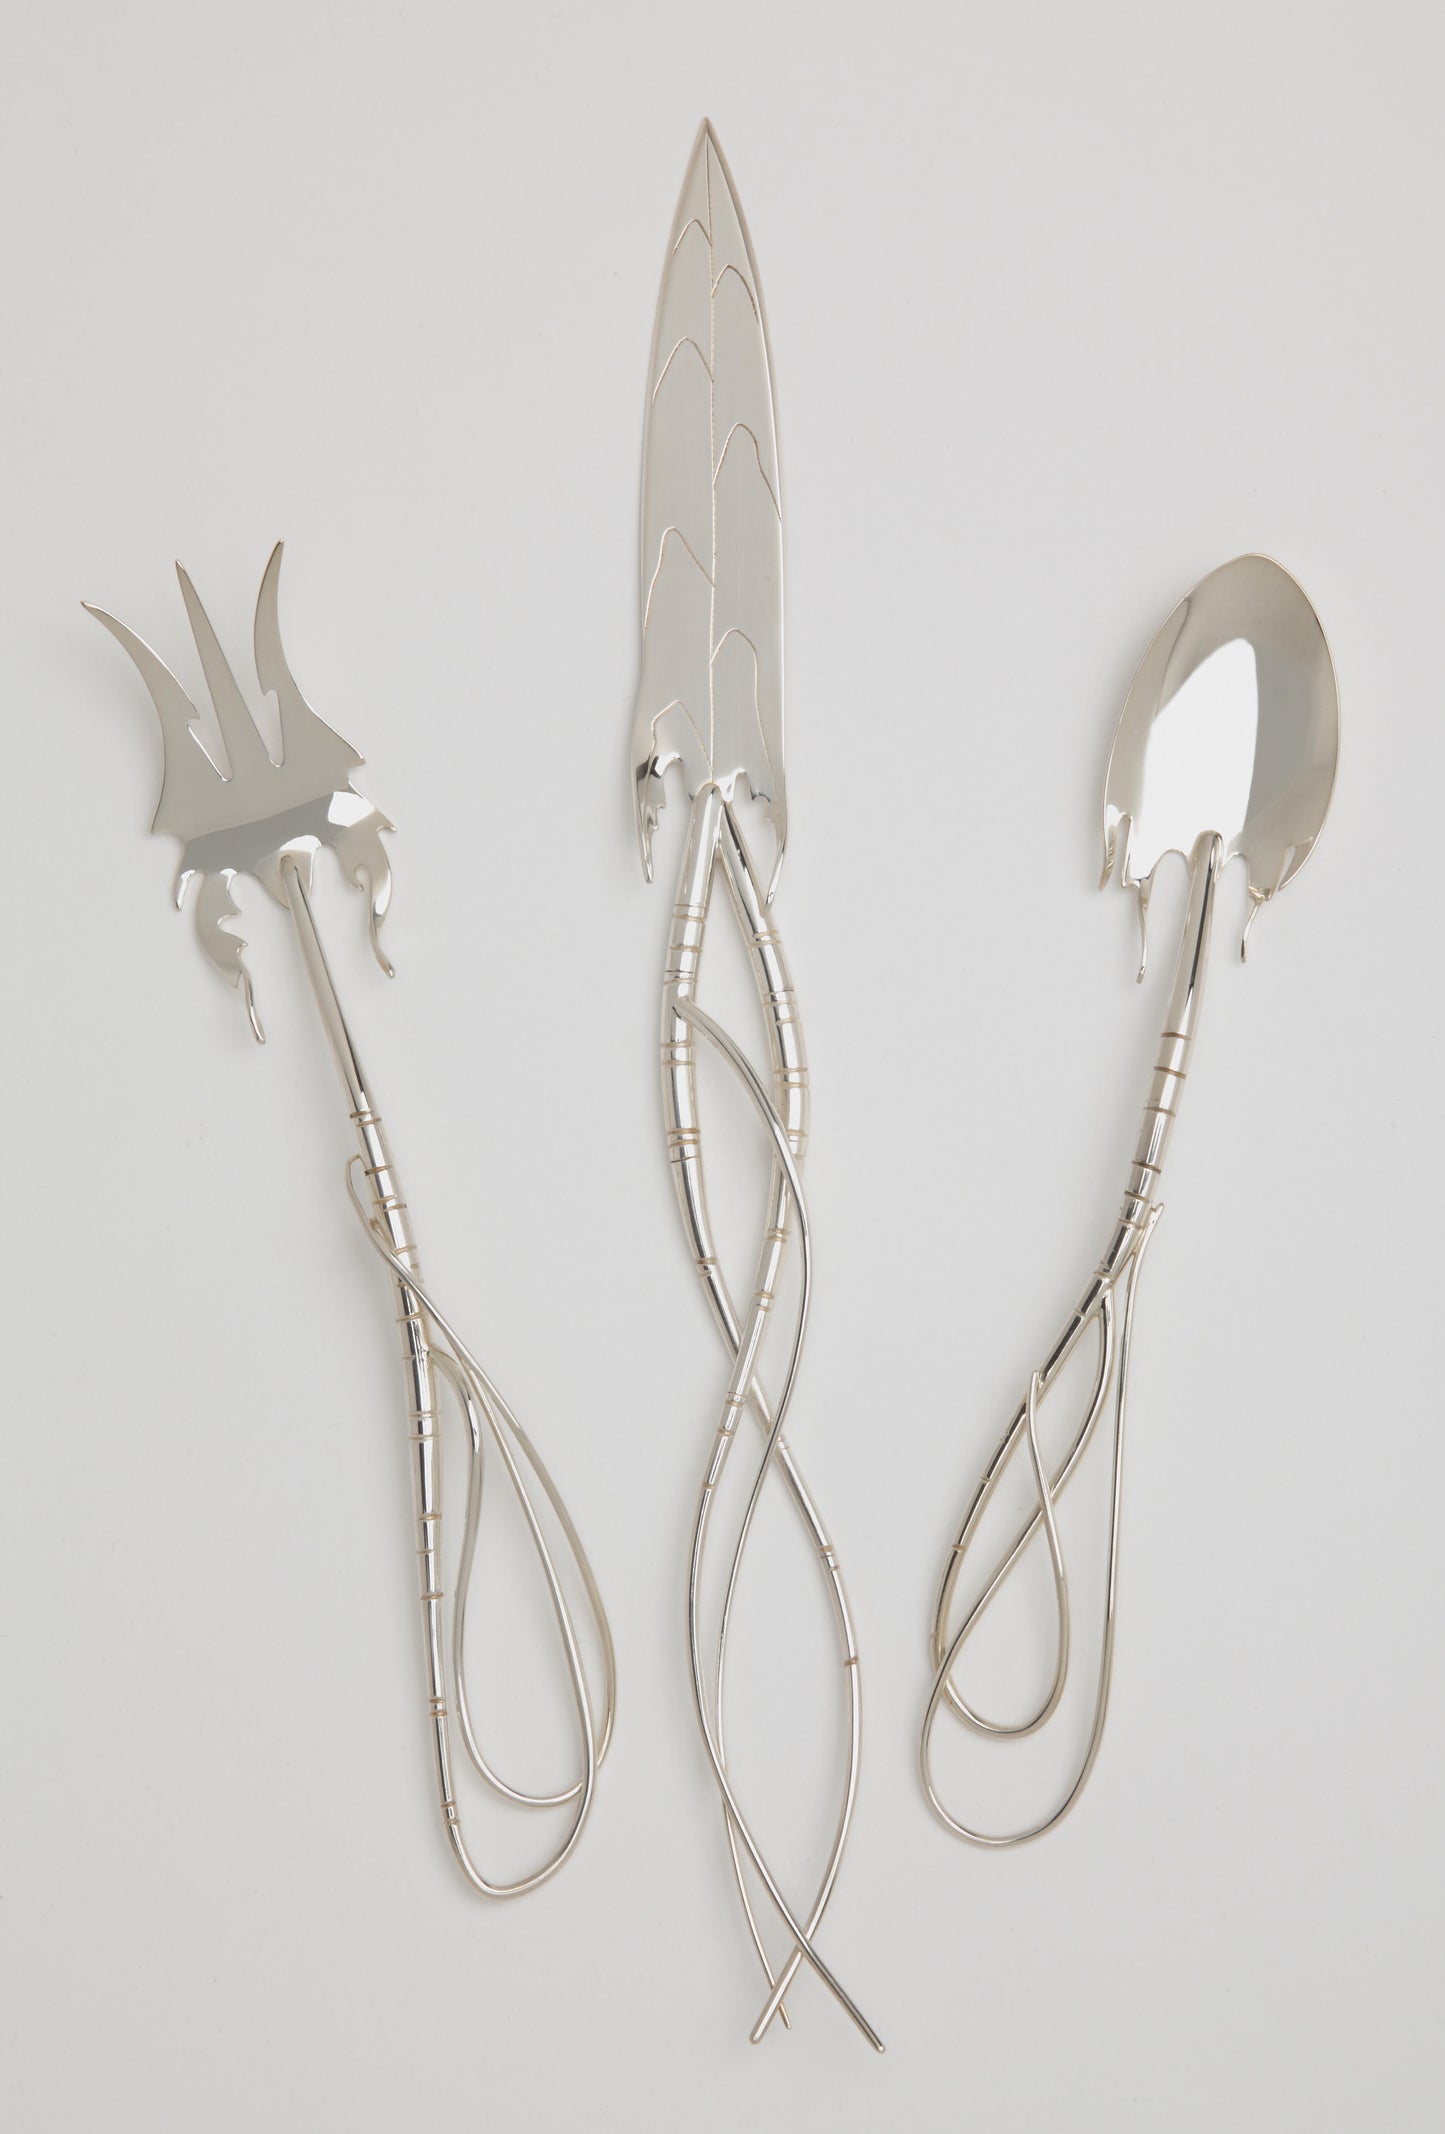 Dandelion spoon, knife and fork